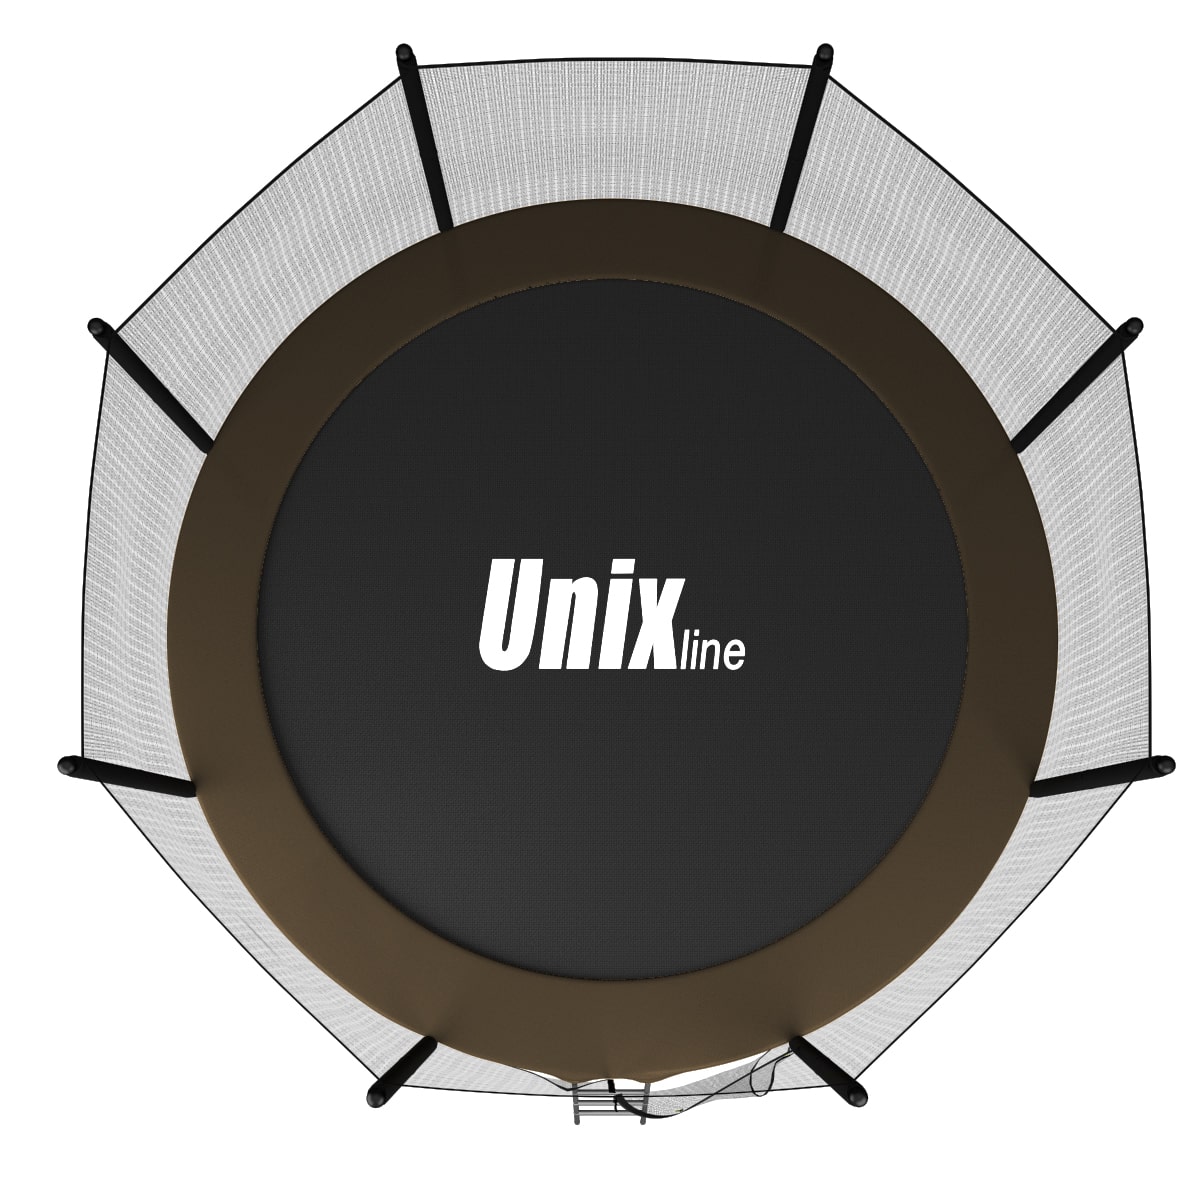 Батут UNIX line Black&Brown 8 ft, внешняя сетка